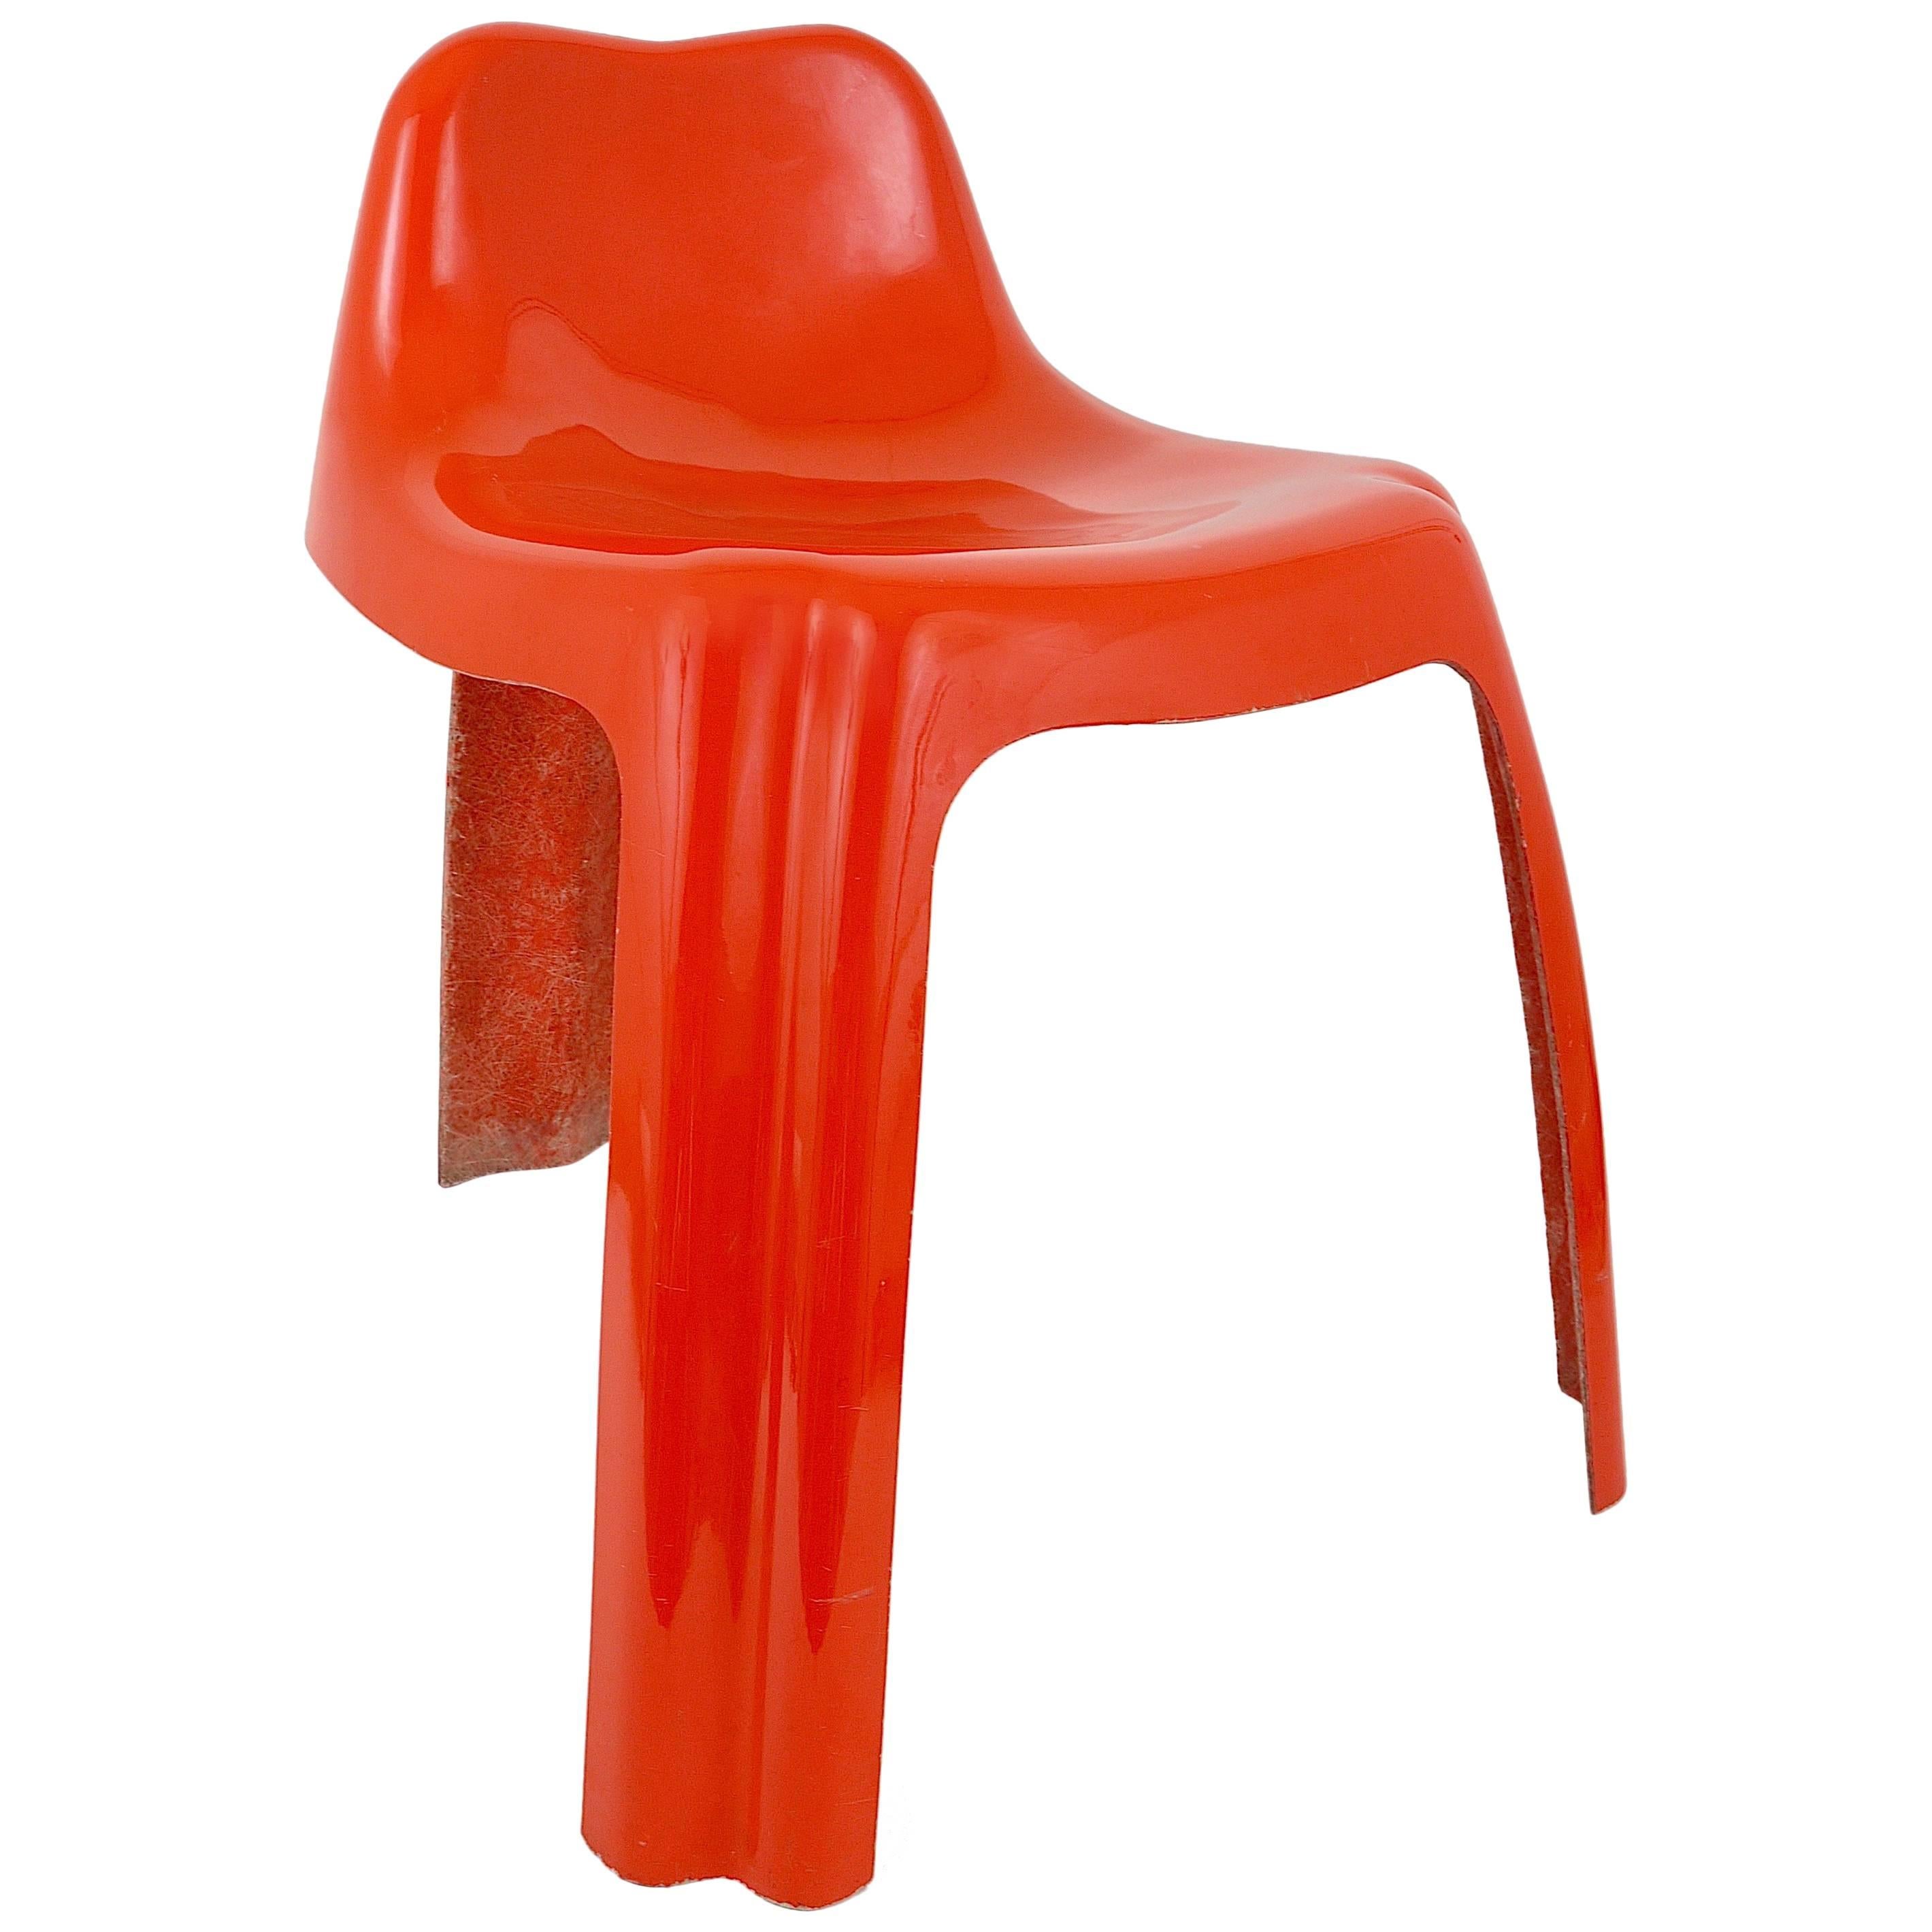 Patrick Gingembre Ginger Orange Fiberglass Chair Ginger, Paulus, France, 1970s For Sale